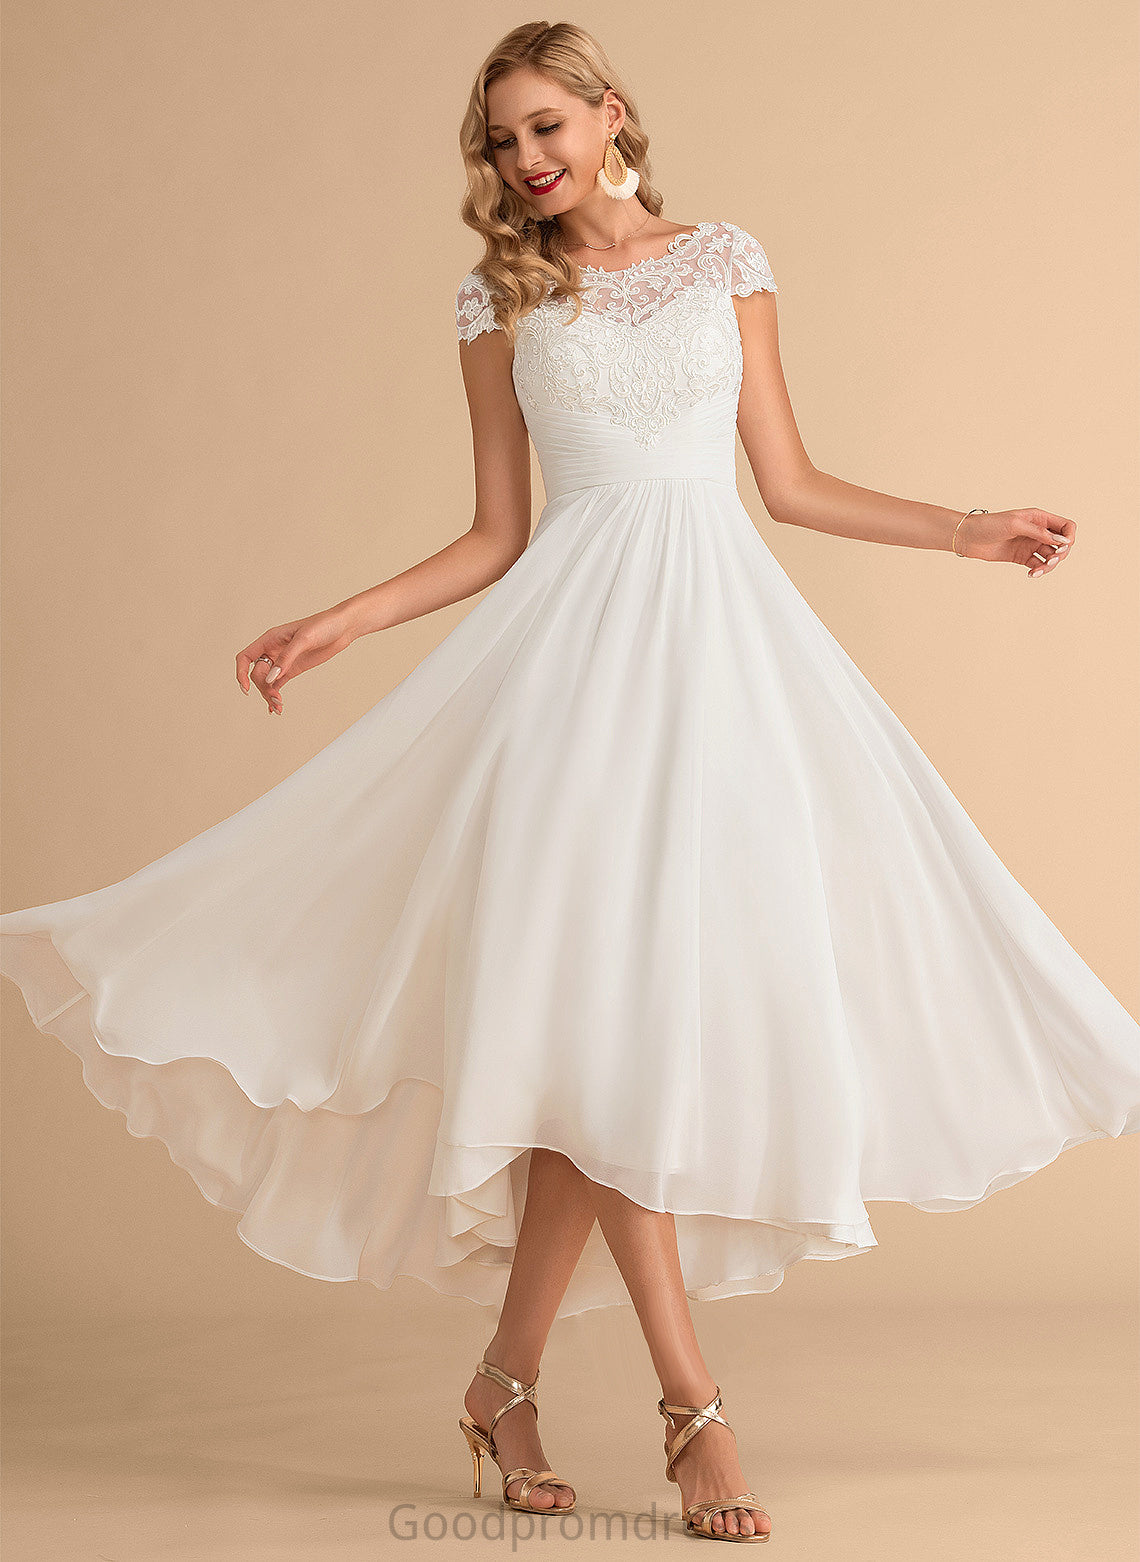 Asymmetrical Philippa A-Line Chiffon Dress Wedding Dresses Neck Wedding Scoop